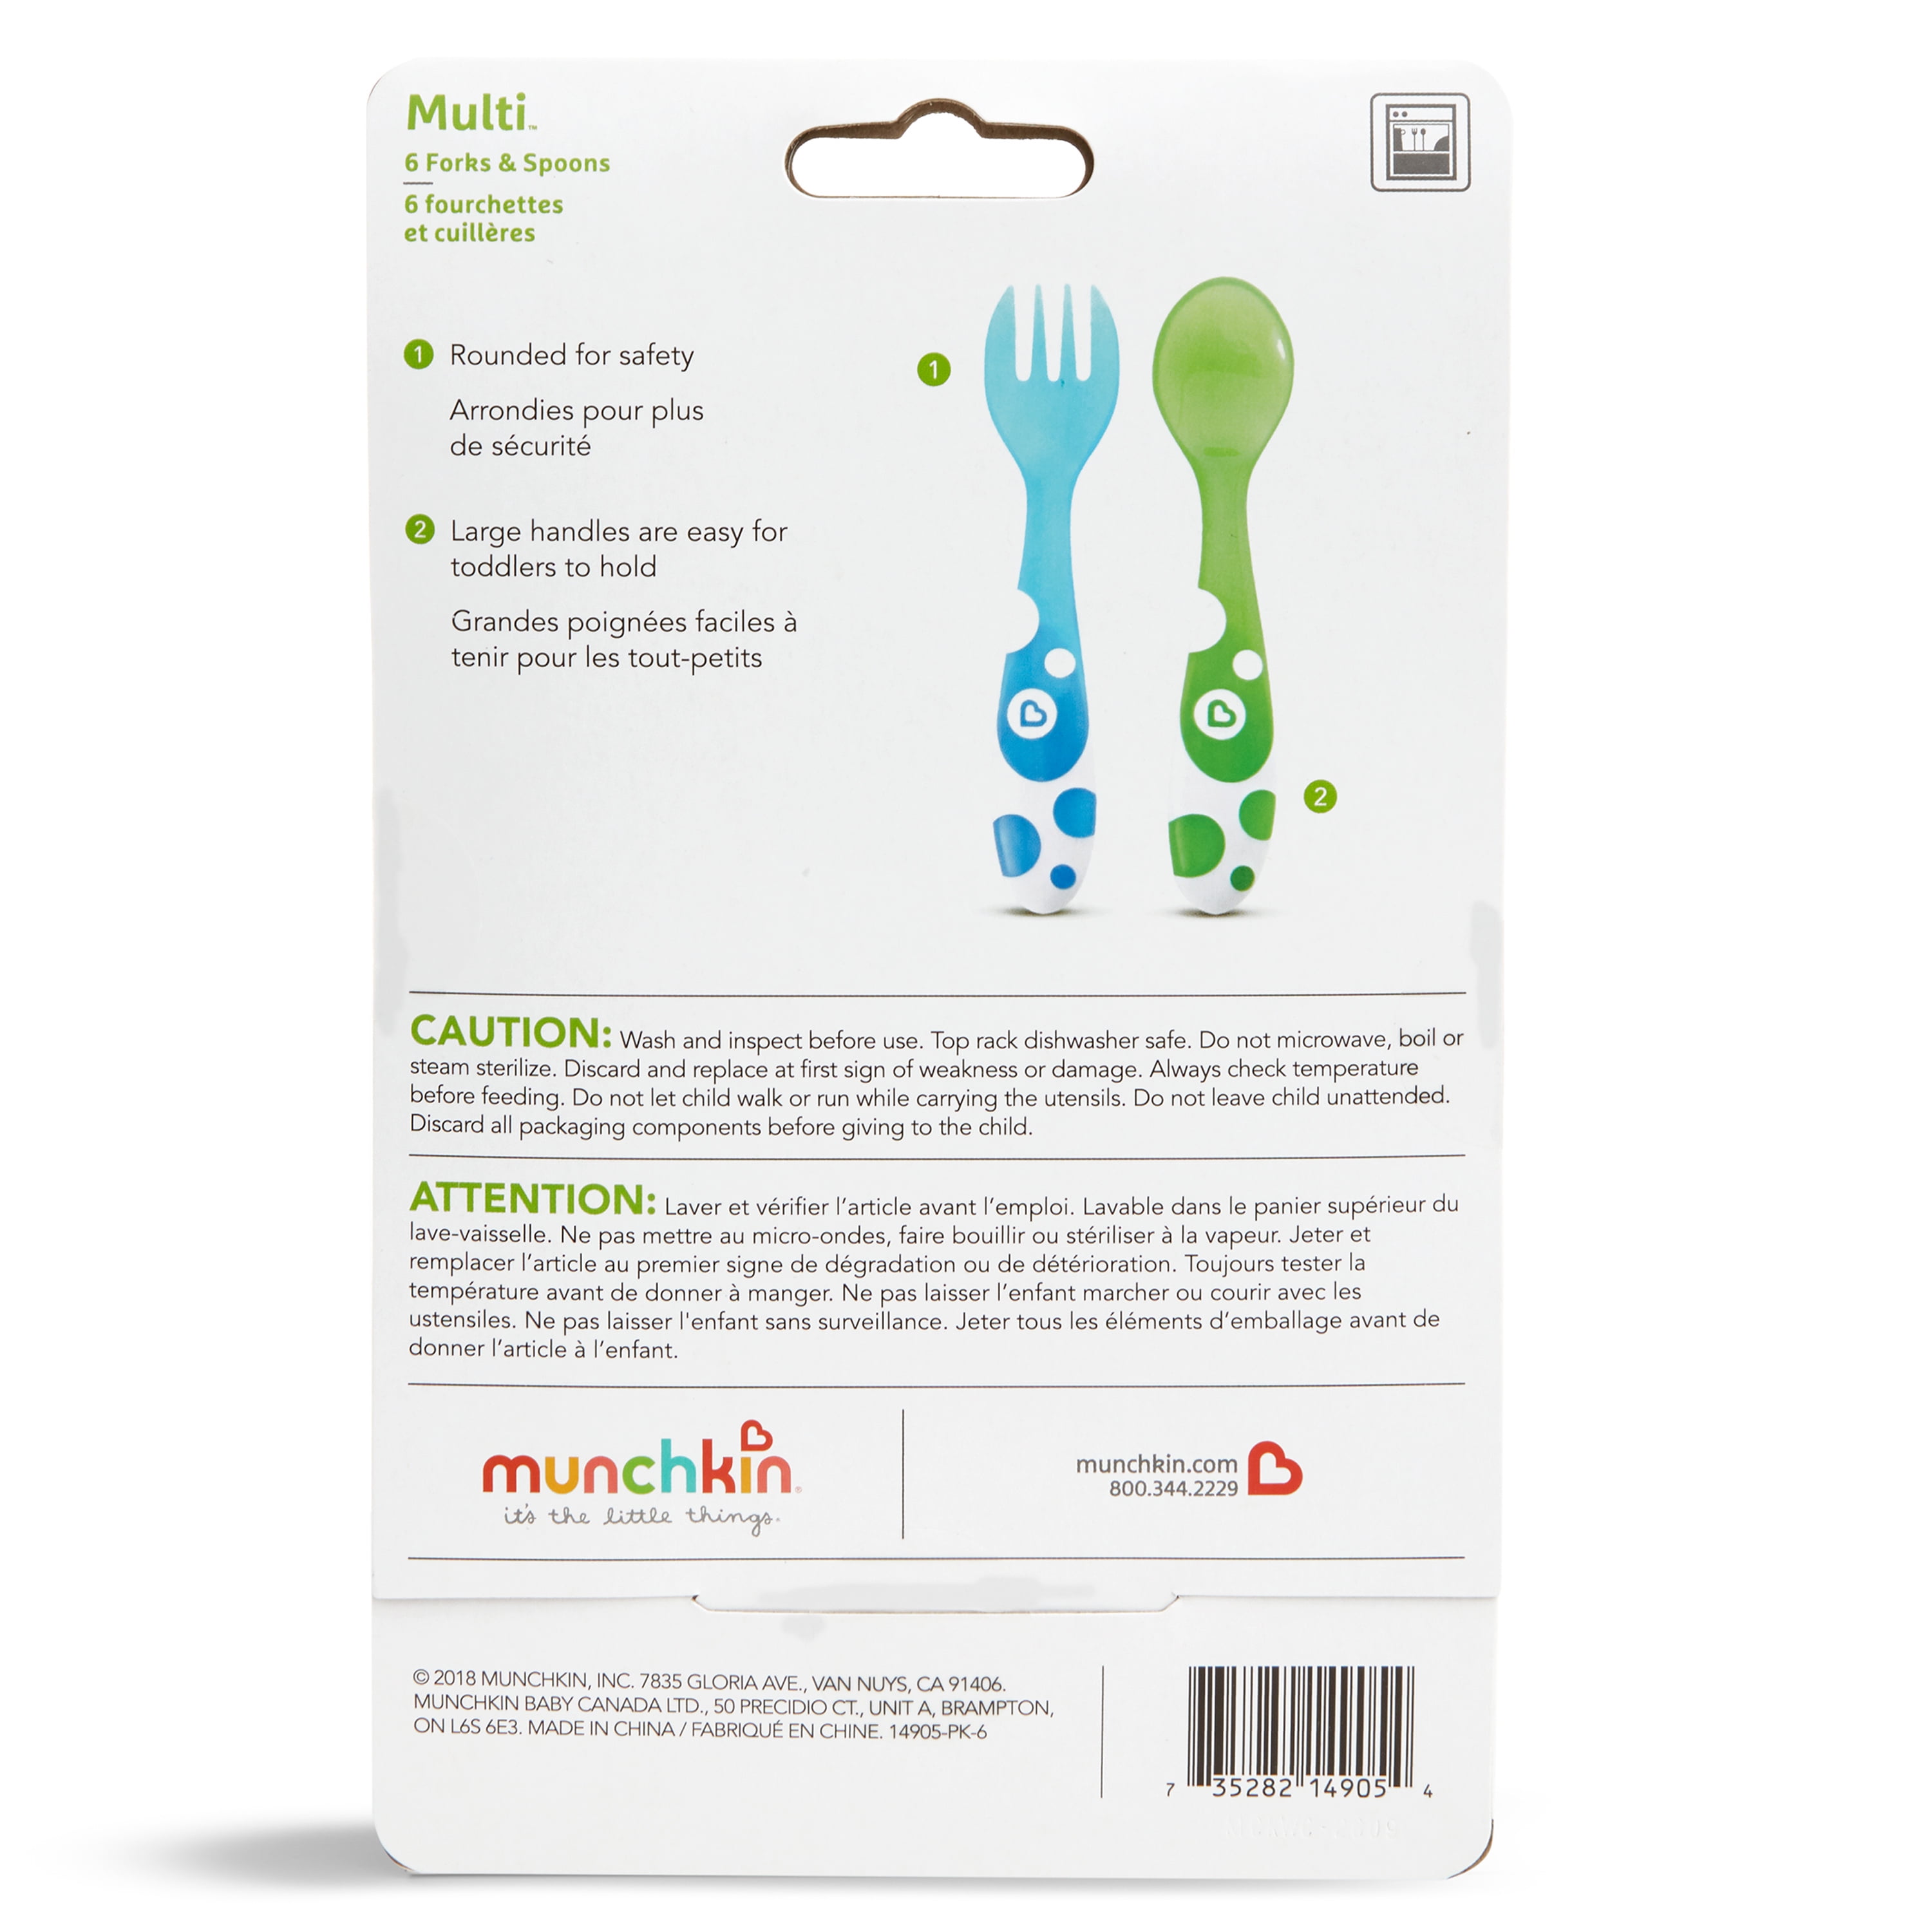 Munchkin ColorReveal 6pcs Color Changing Toddler Forks & Spoons - Heat  Sensing